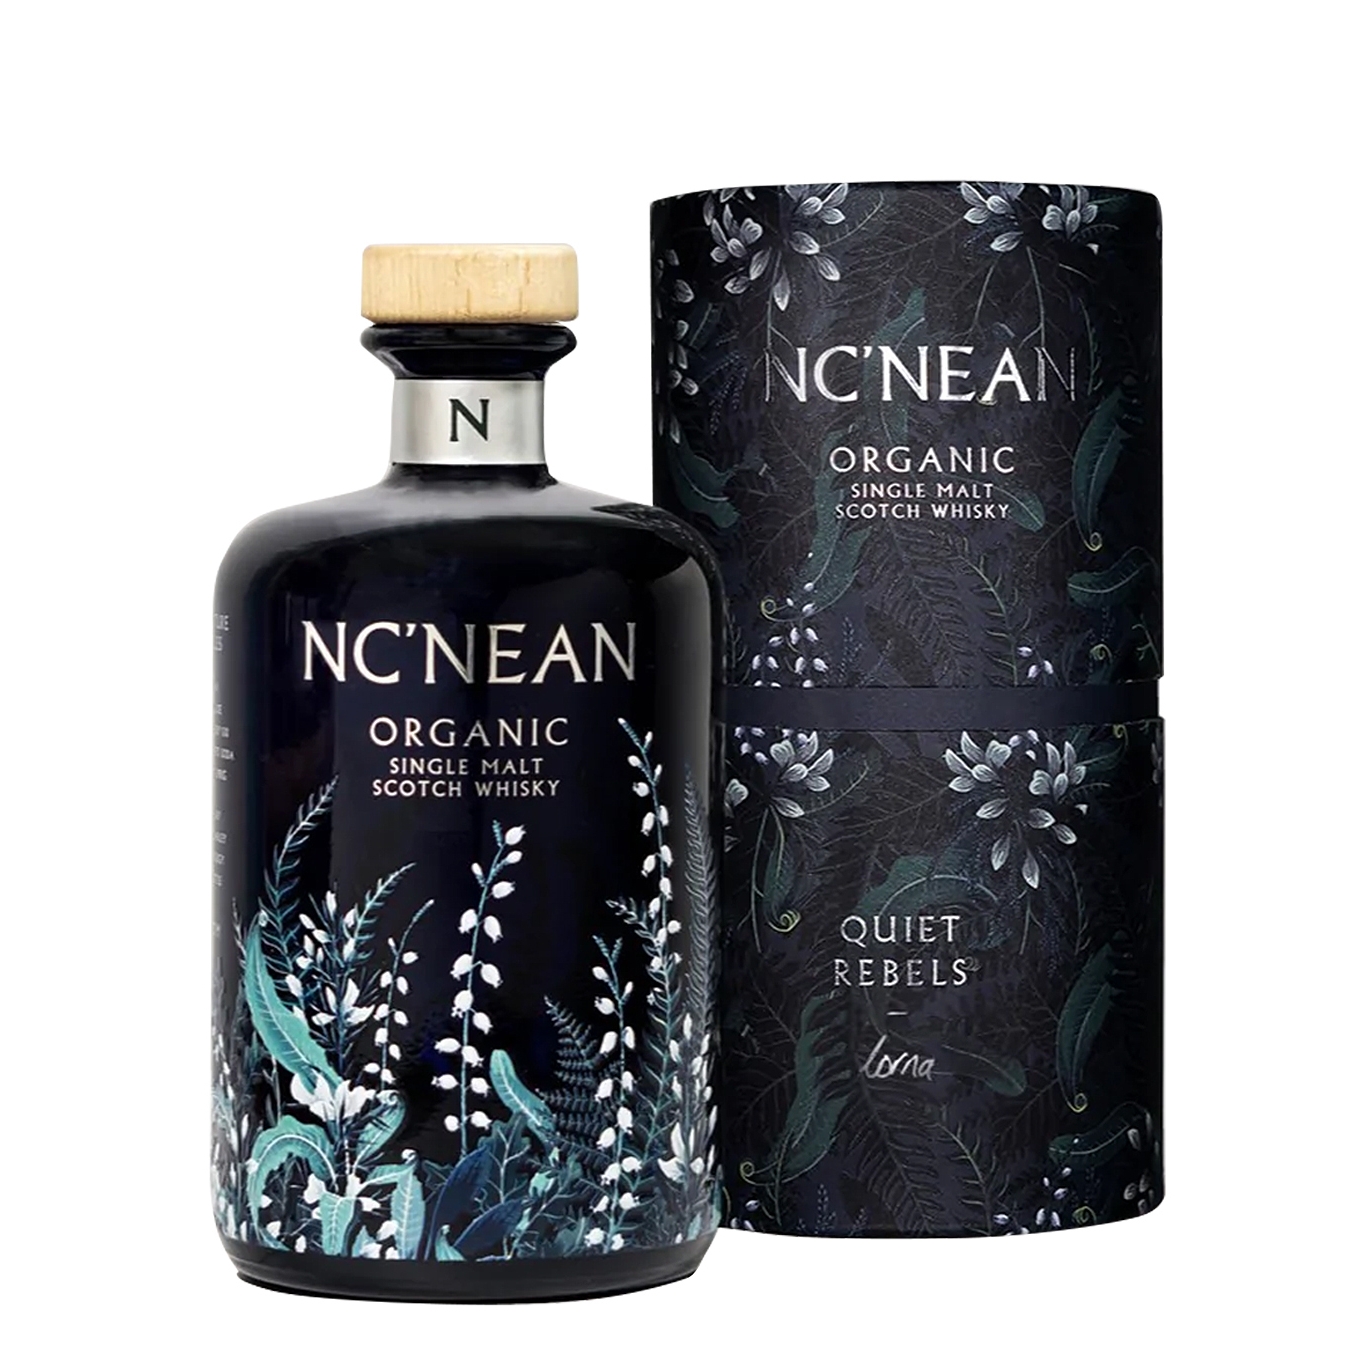 Nc'nean Quiet Rebels: Lorna Organic Single Malt Scotch Whisky Gift Box